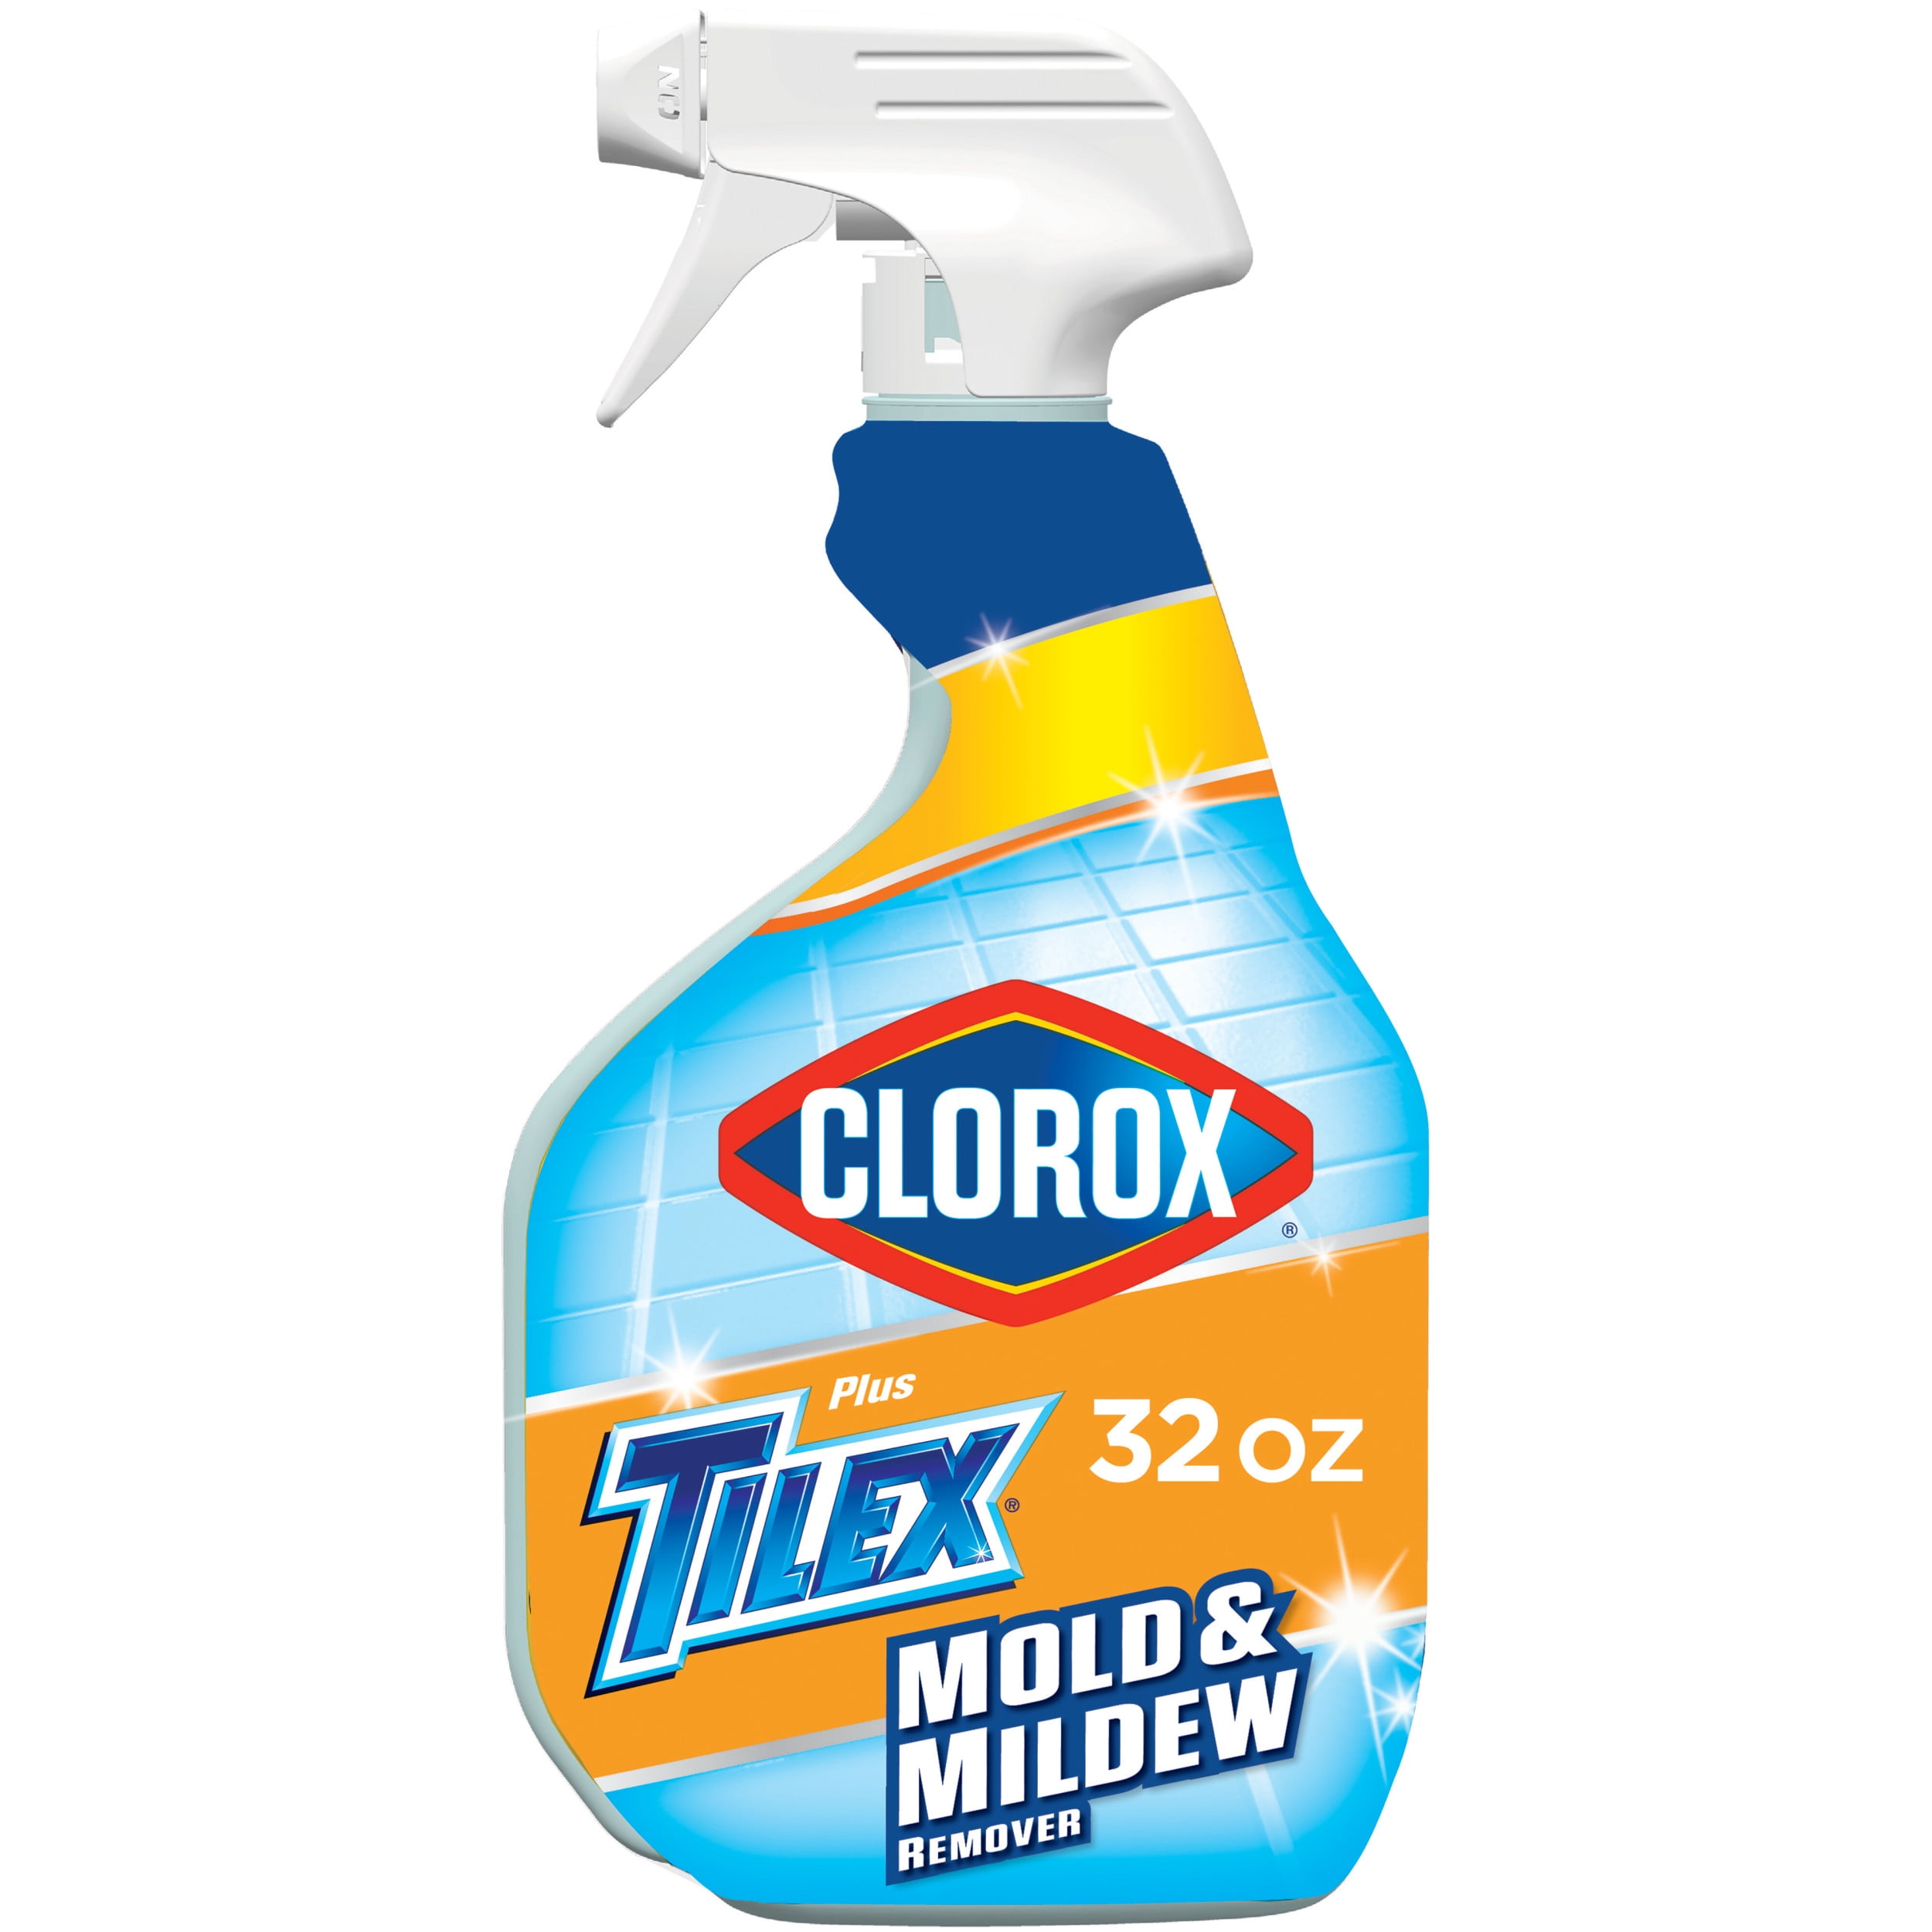 Clorox Plus Tilex Mold and Mildew Remover, Spray Bottle, 32 oz